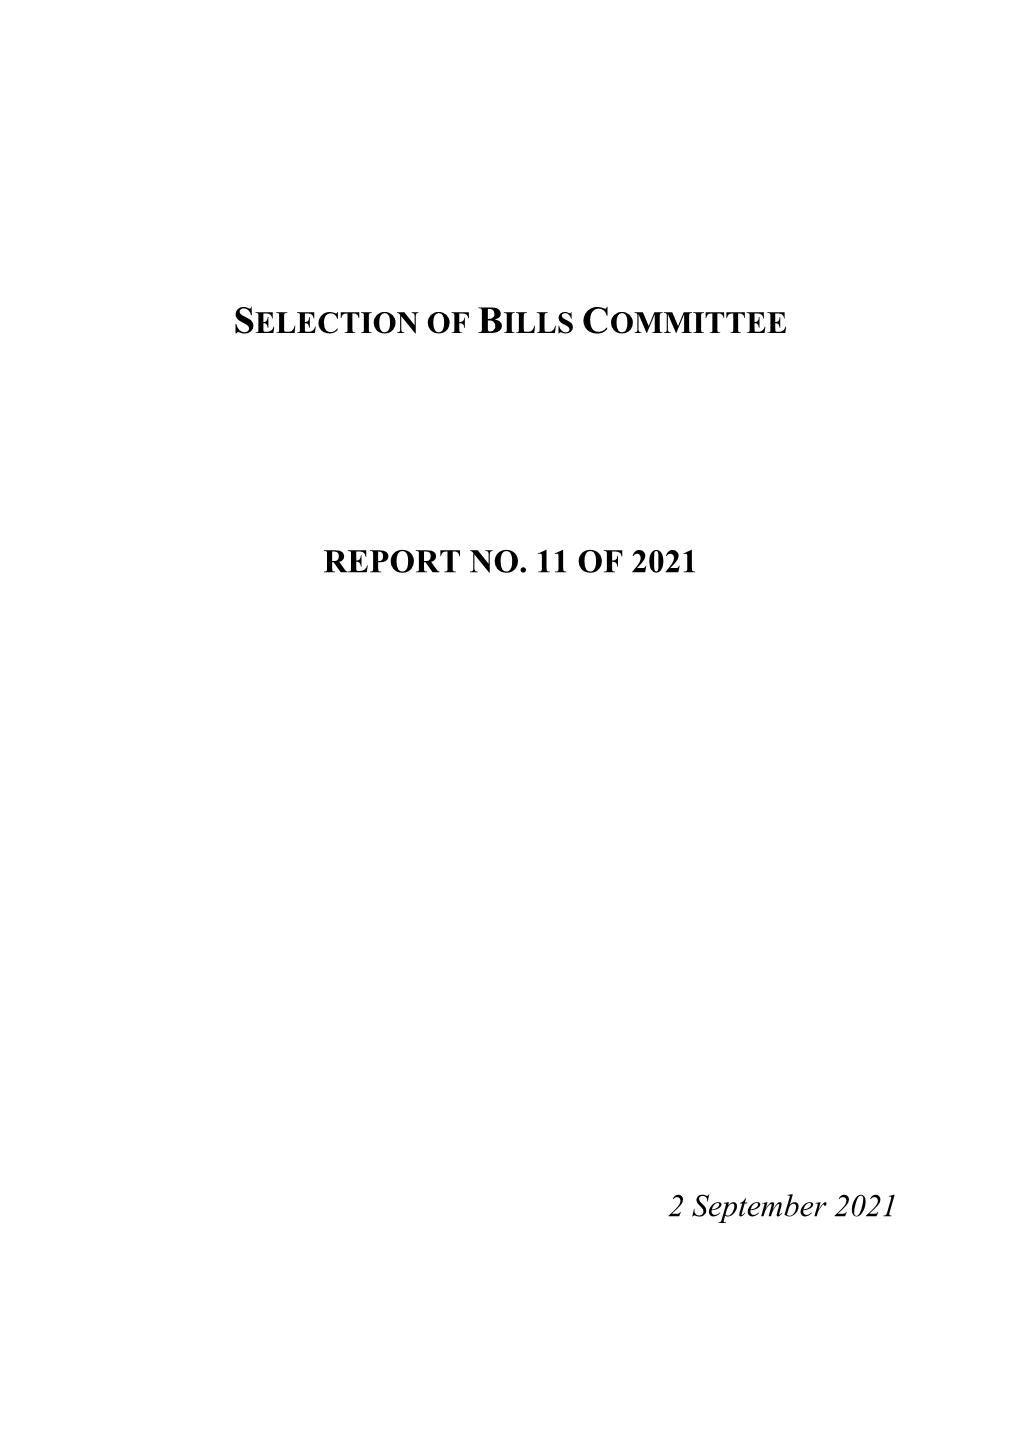 Report No. 11 of 2021